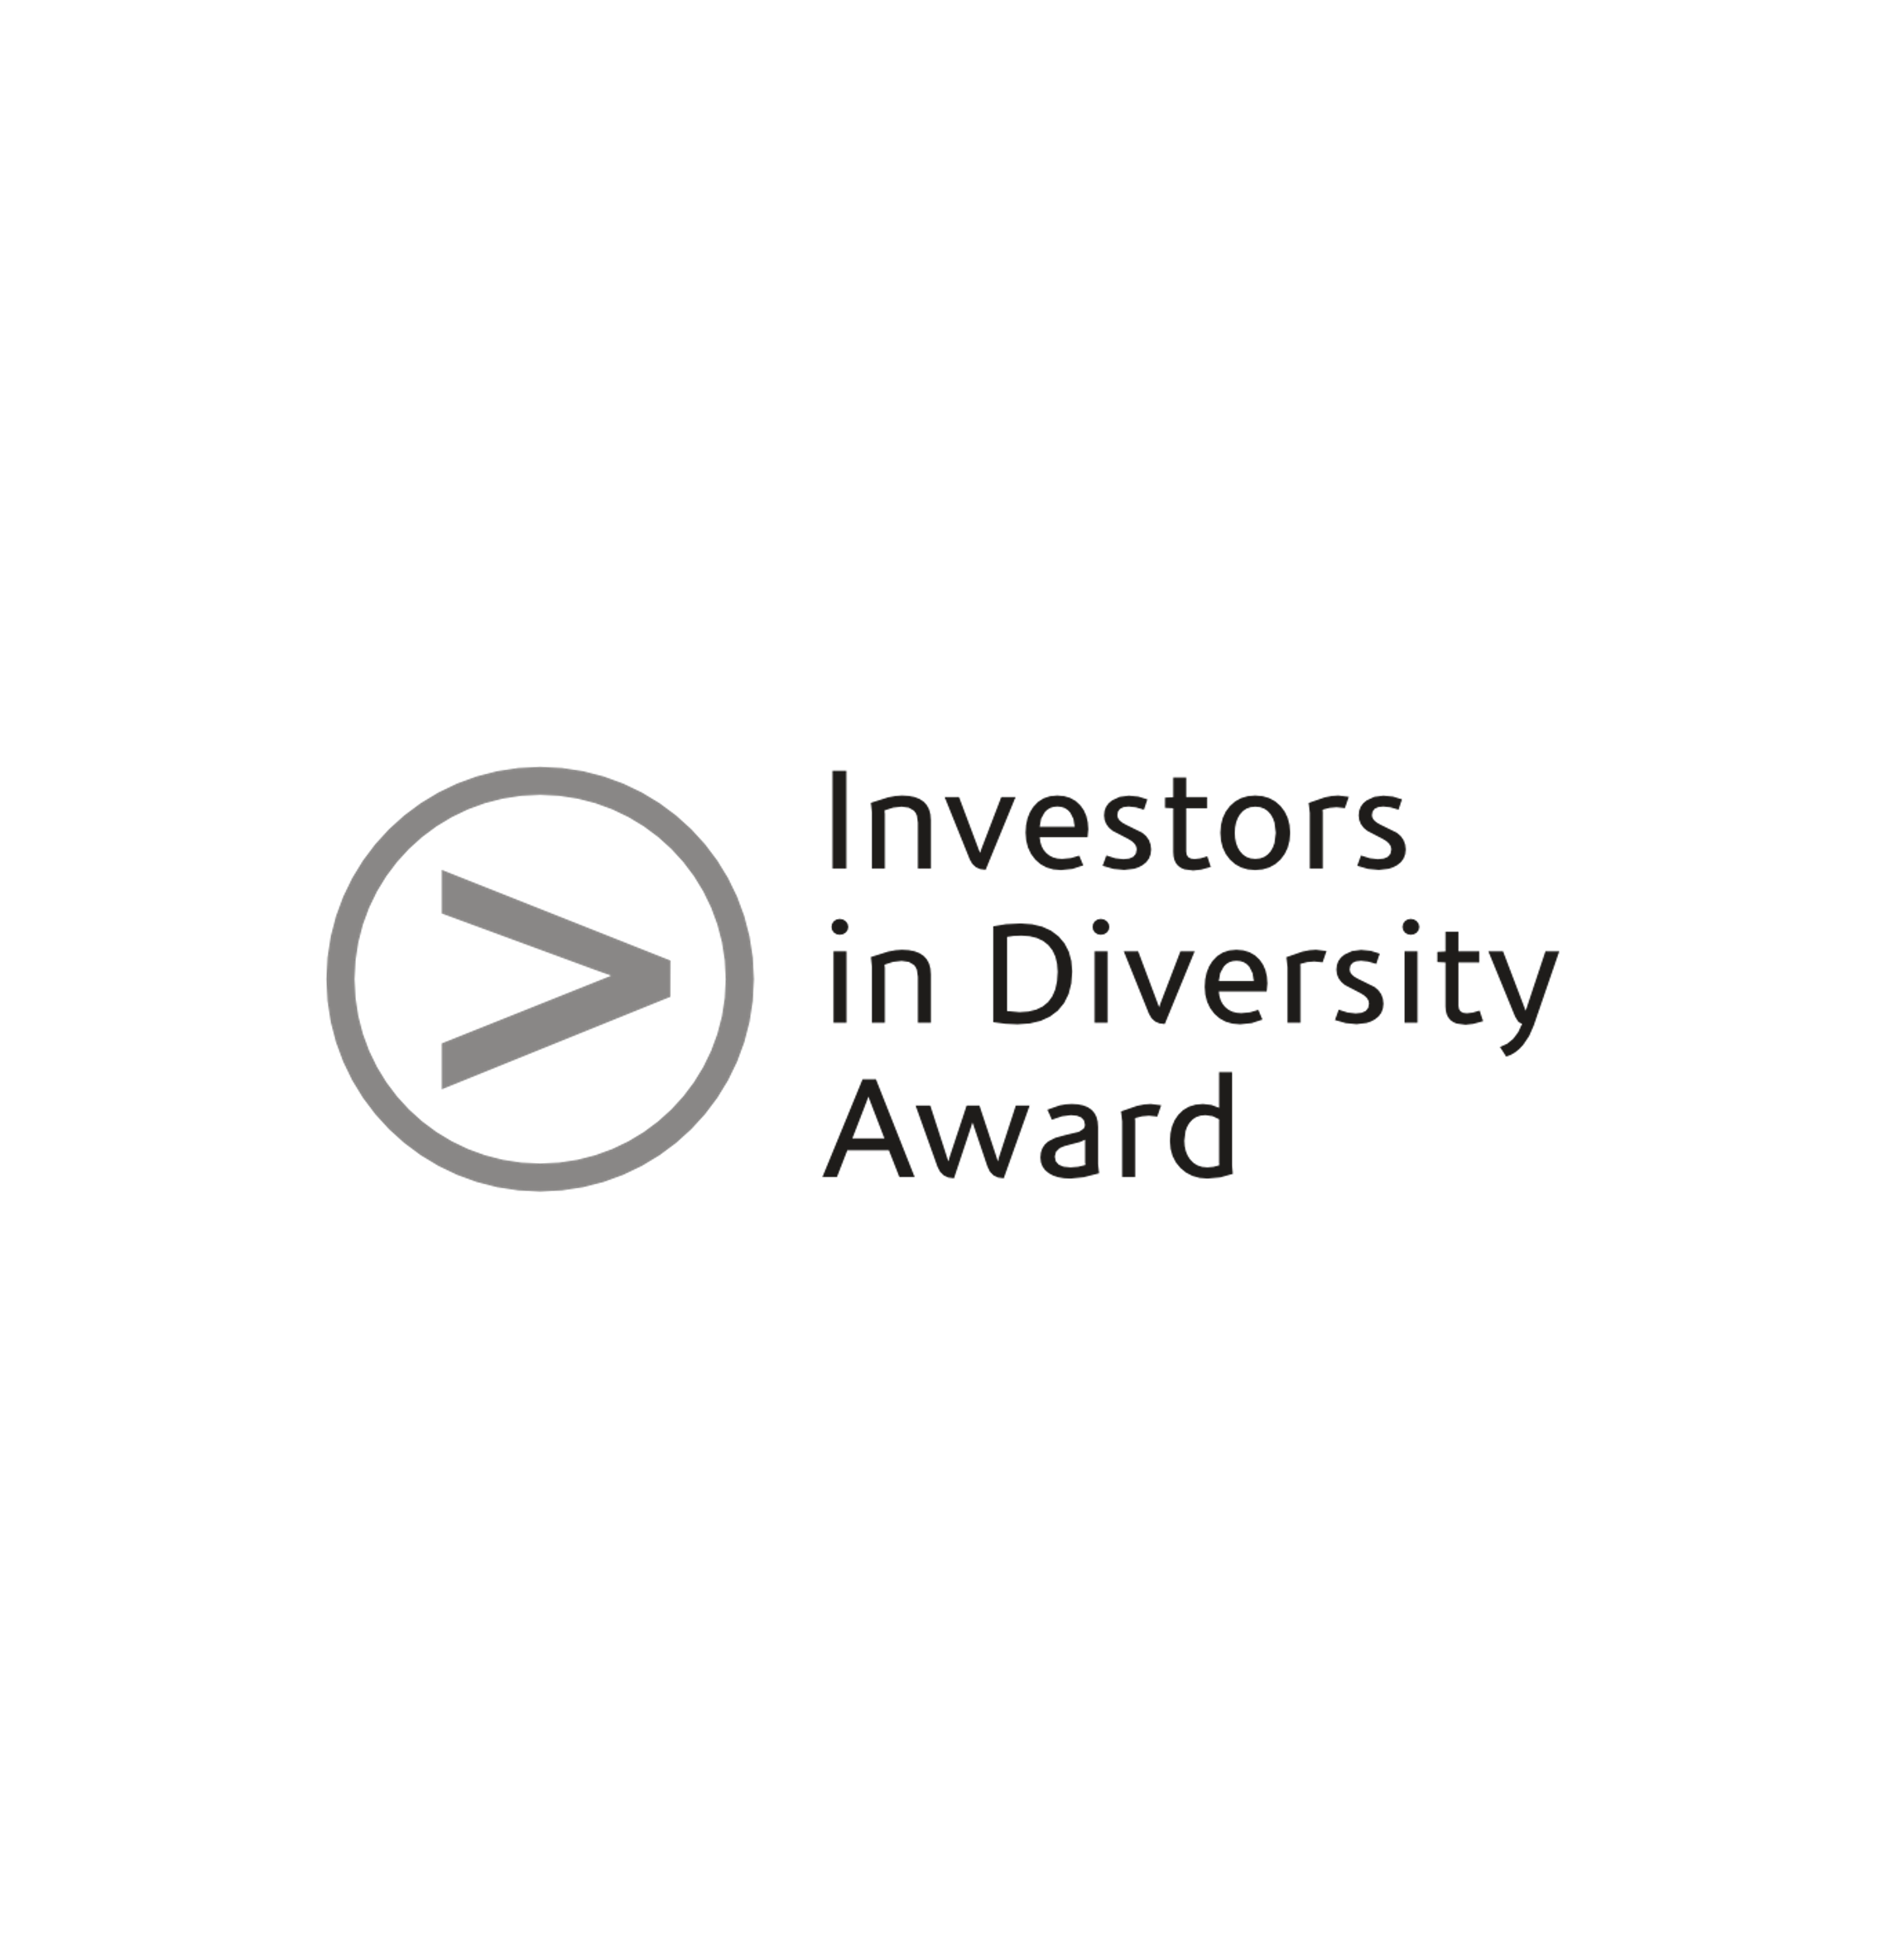 Met Office Jobs - Careers Website - Investors in Diversity Award Logo.png